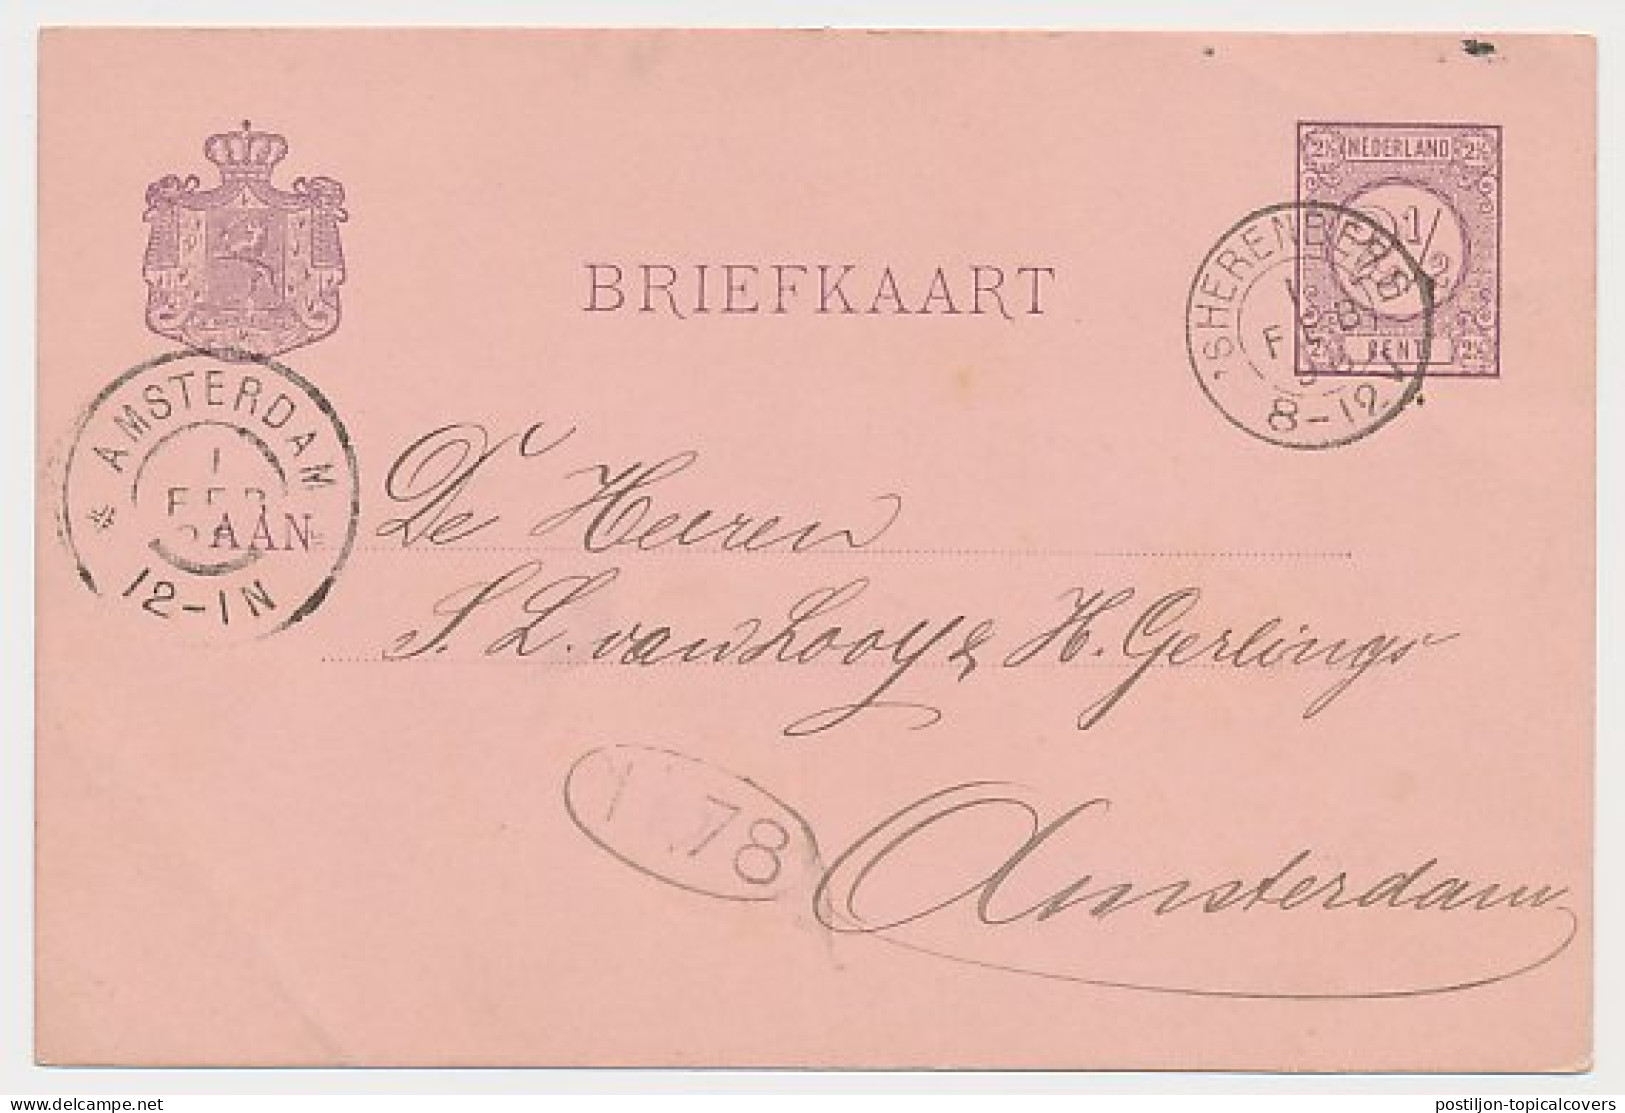 Kleinrondstempel S Herenberg 1896 - Non Classés